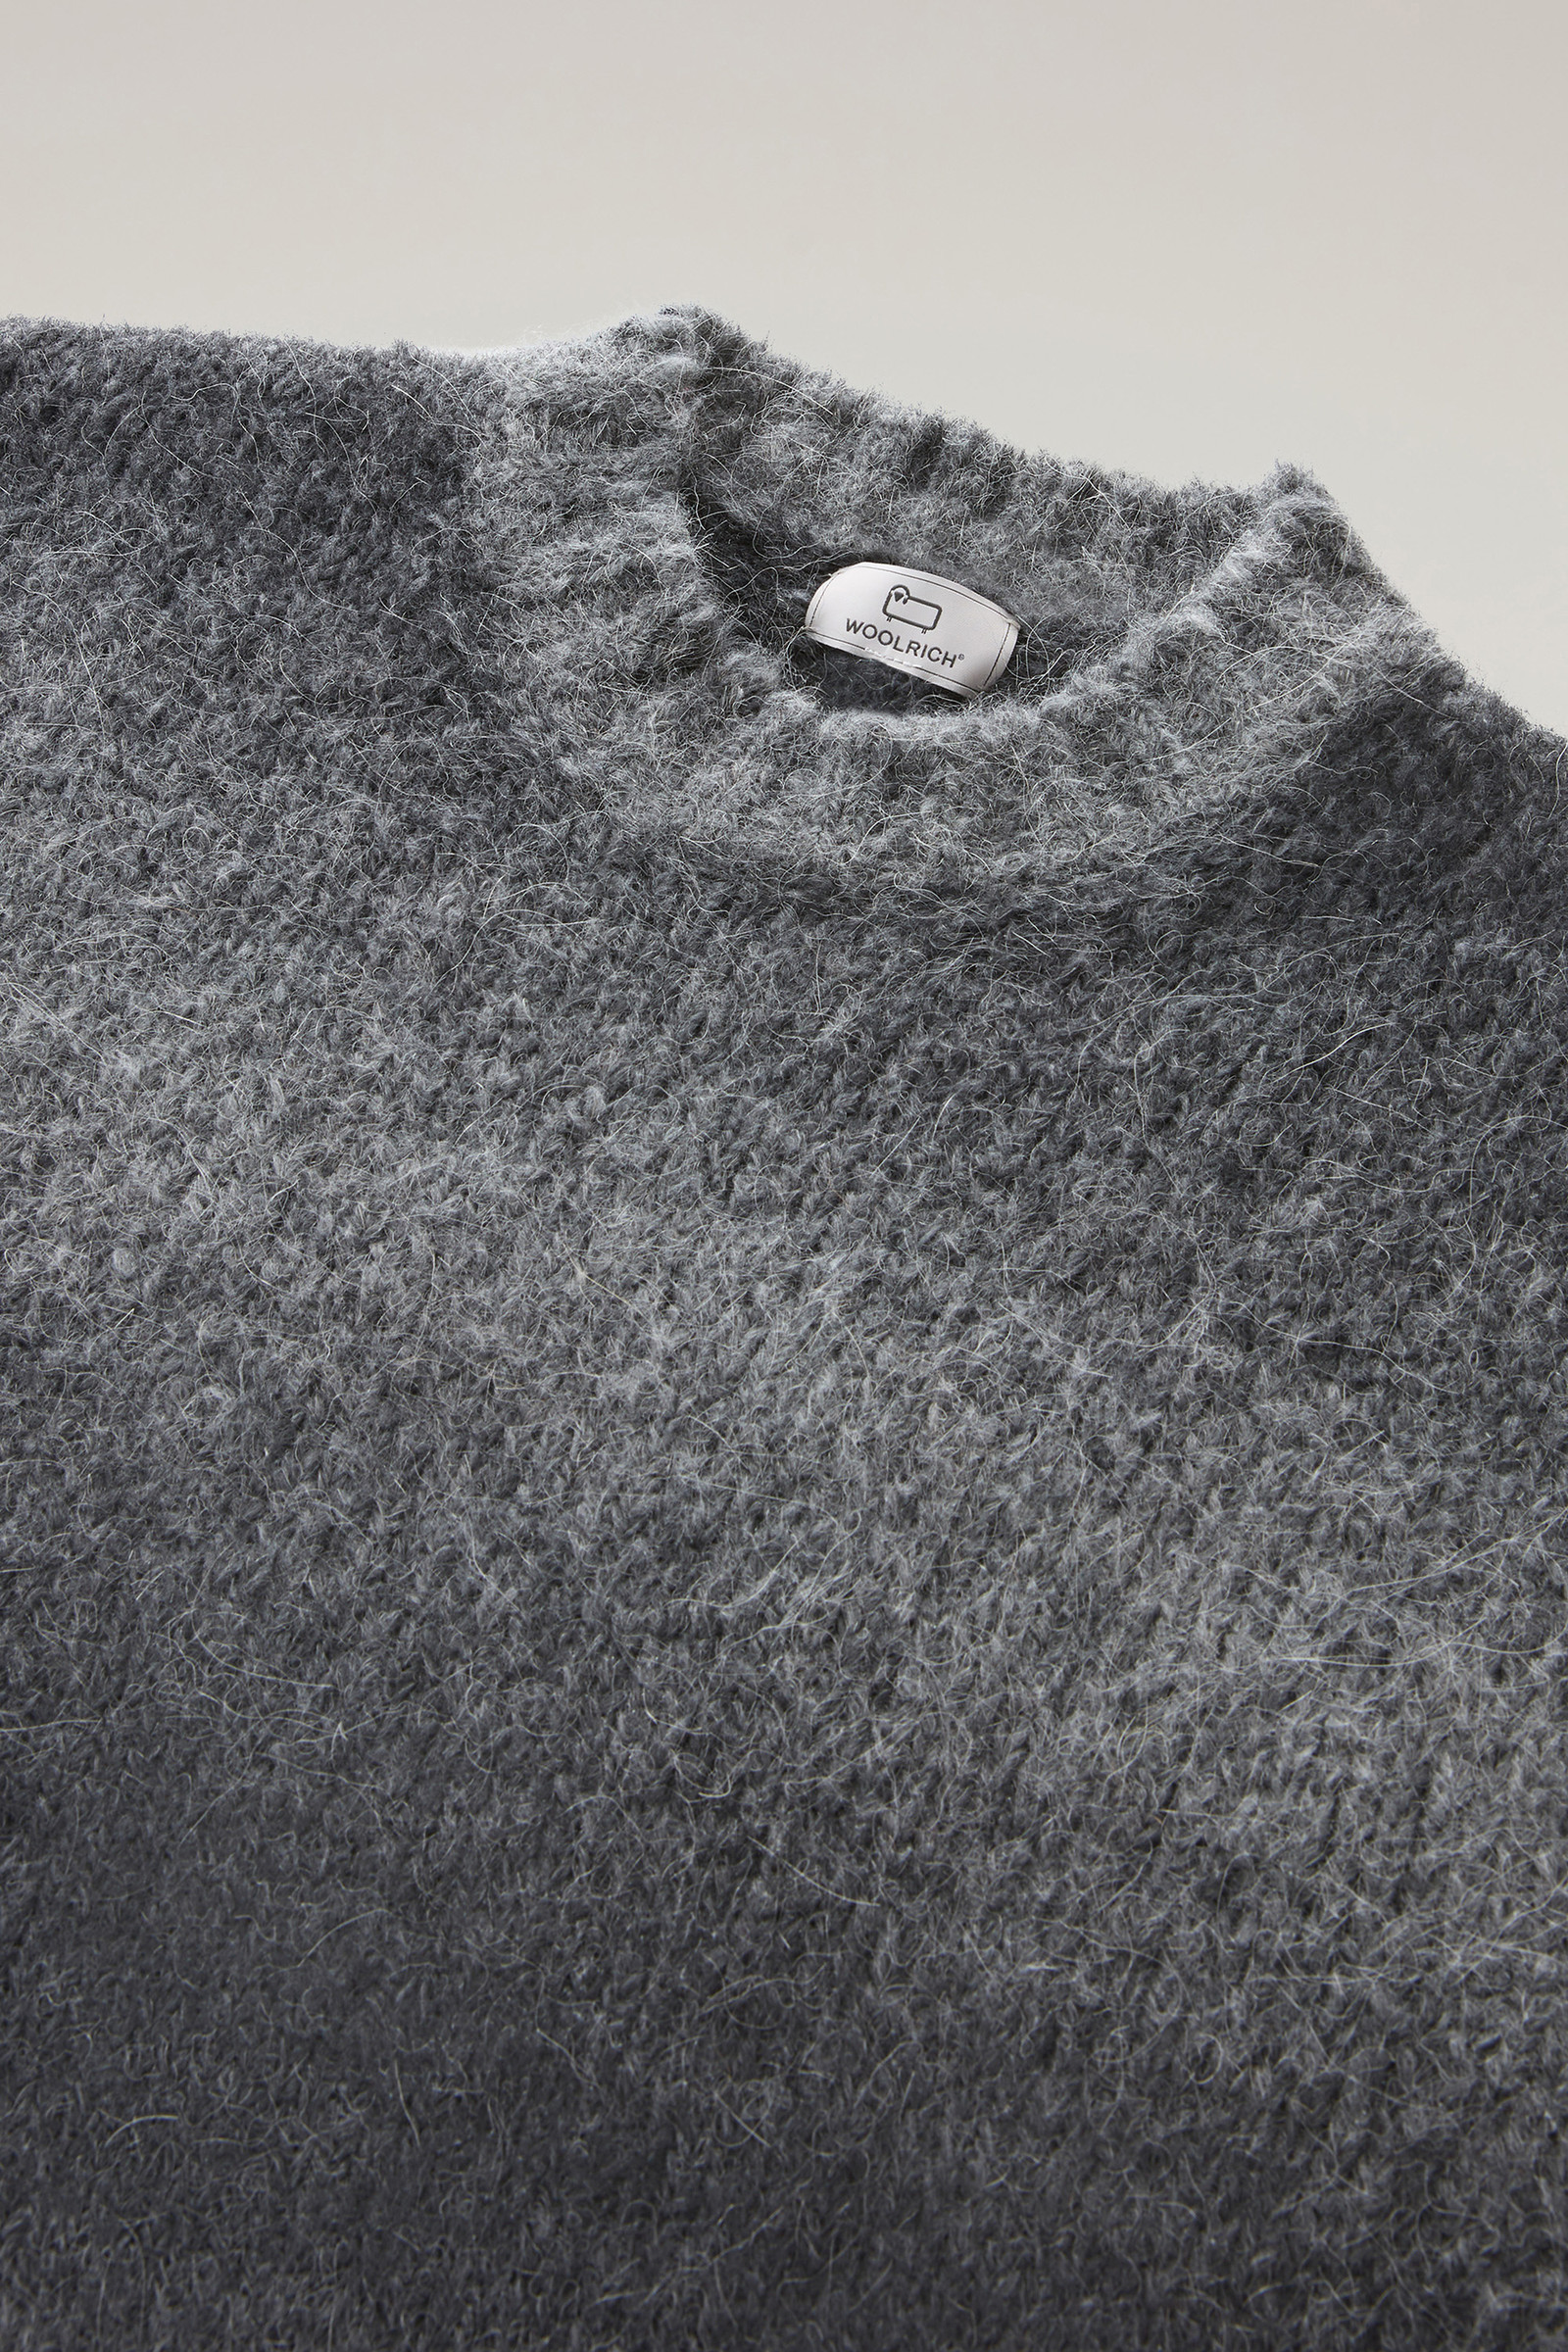 Men's Turtleneck Sweater in Alpaca Blend with Dégradé Effect Grey ...